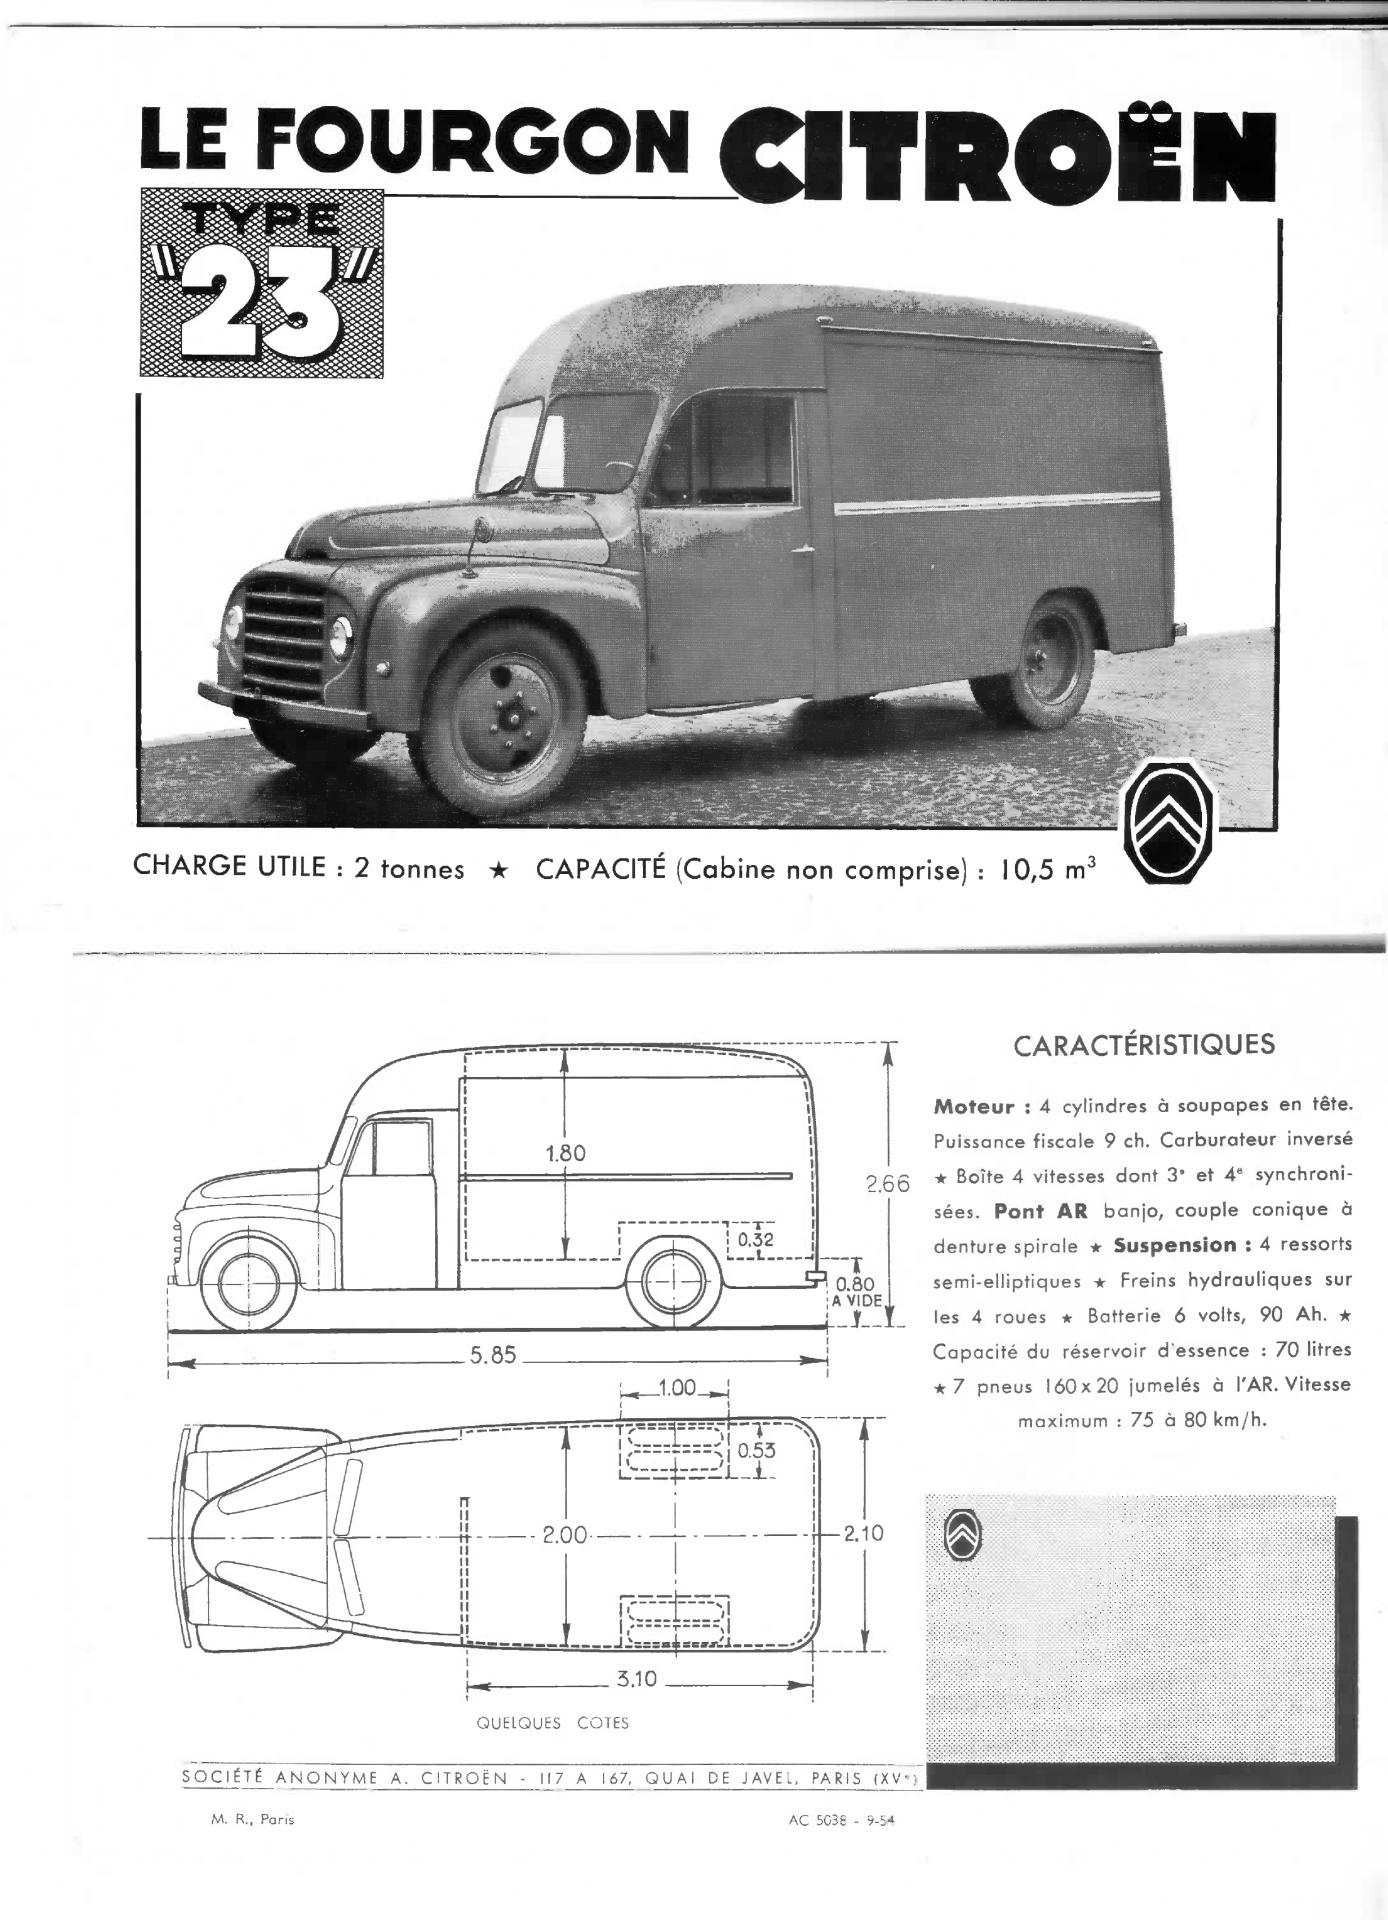 1954 Citroën type 23 fourgon